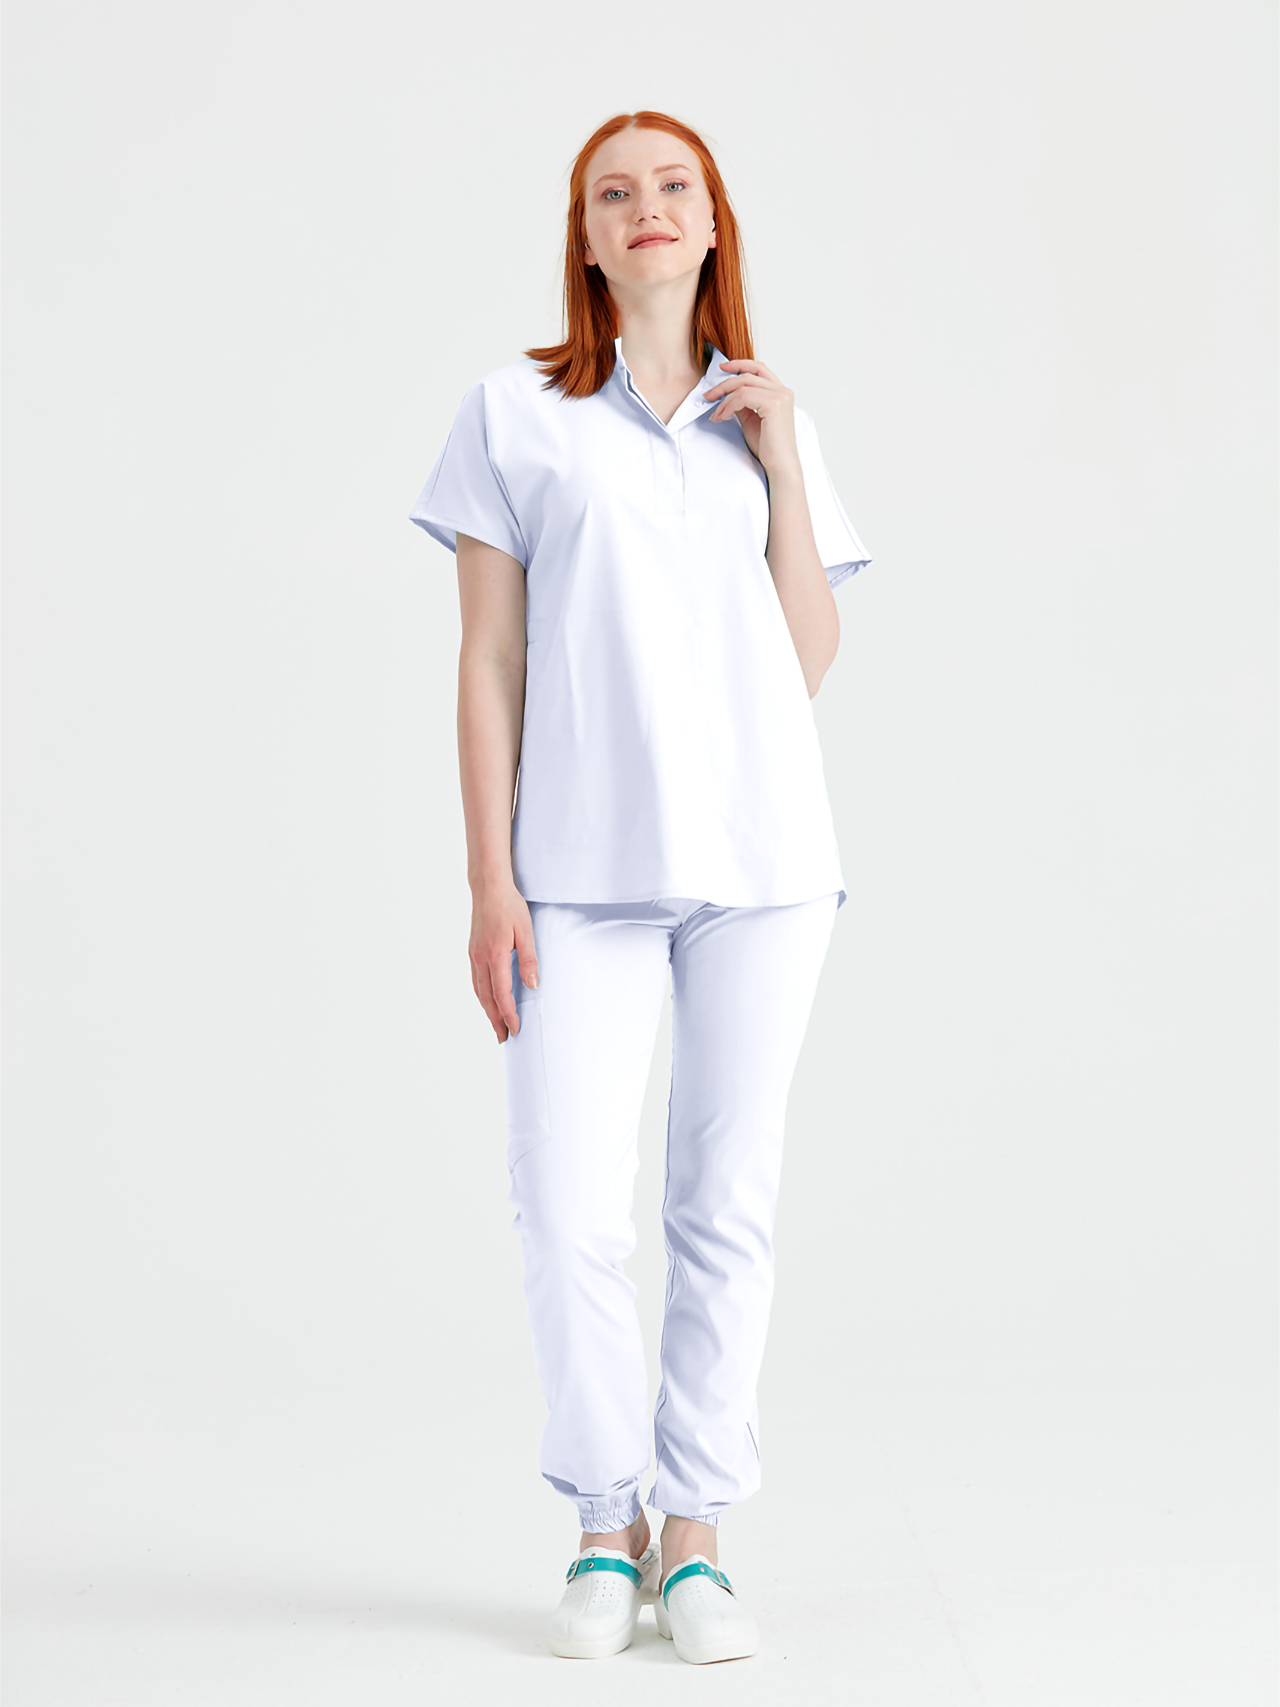 Asistenta medicala imbracata in costum medical de dama alb - white, vedere din profil